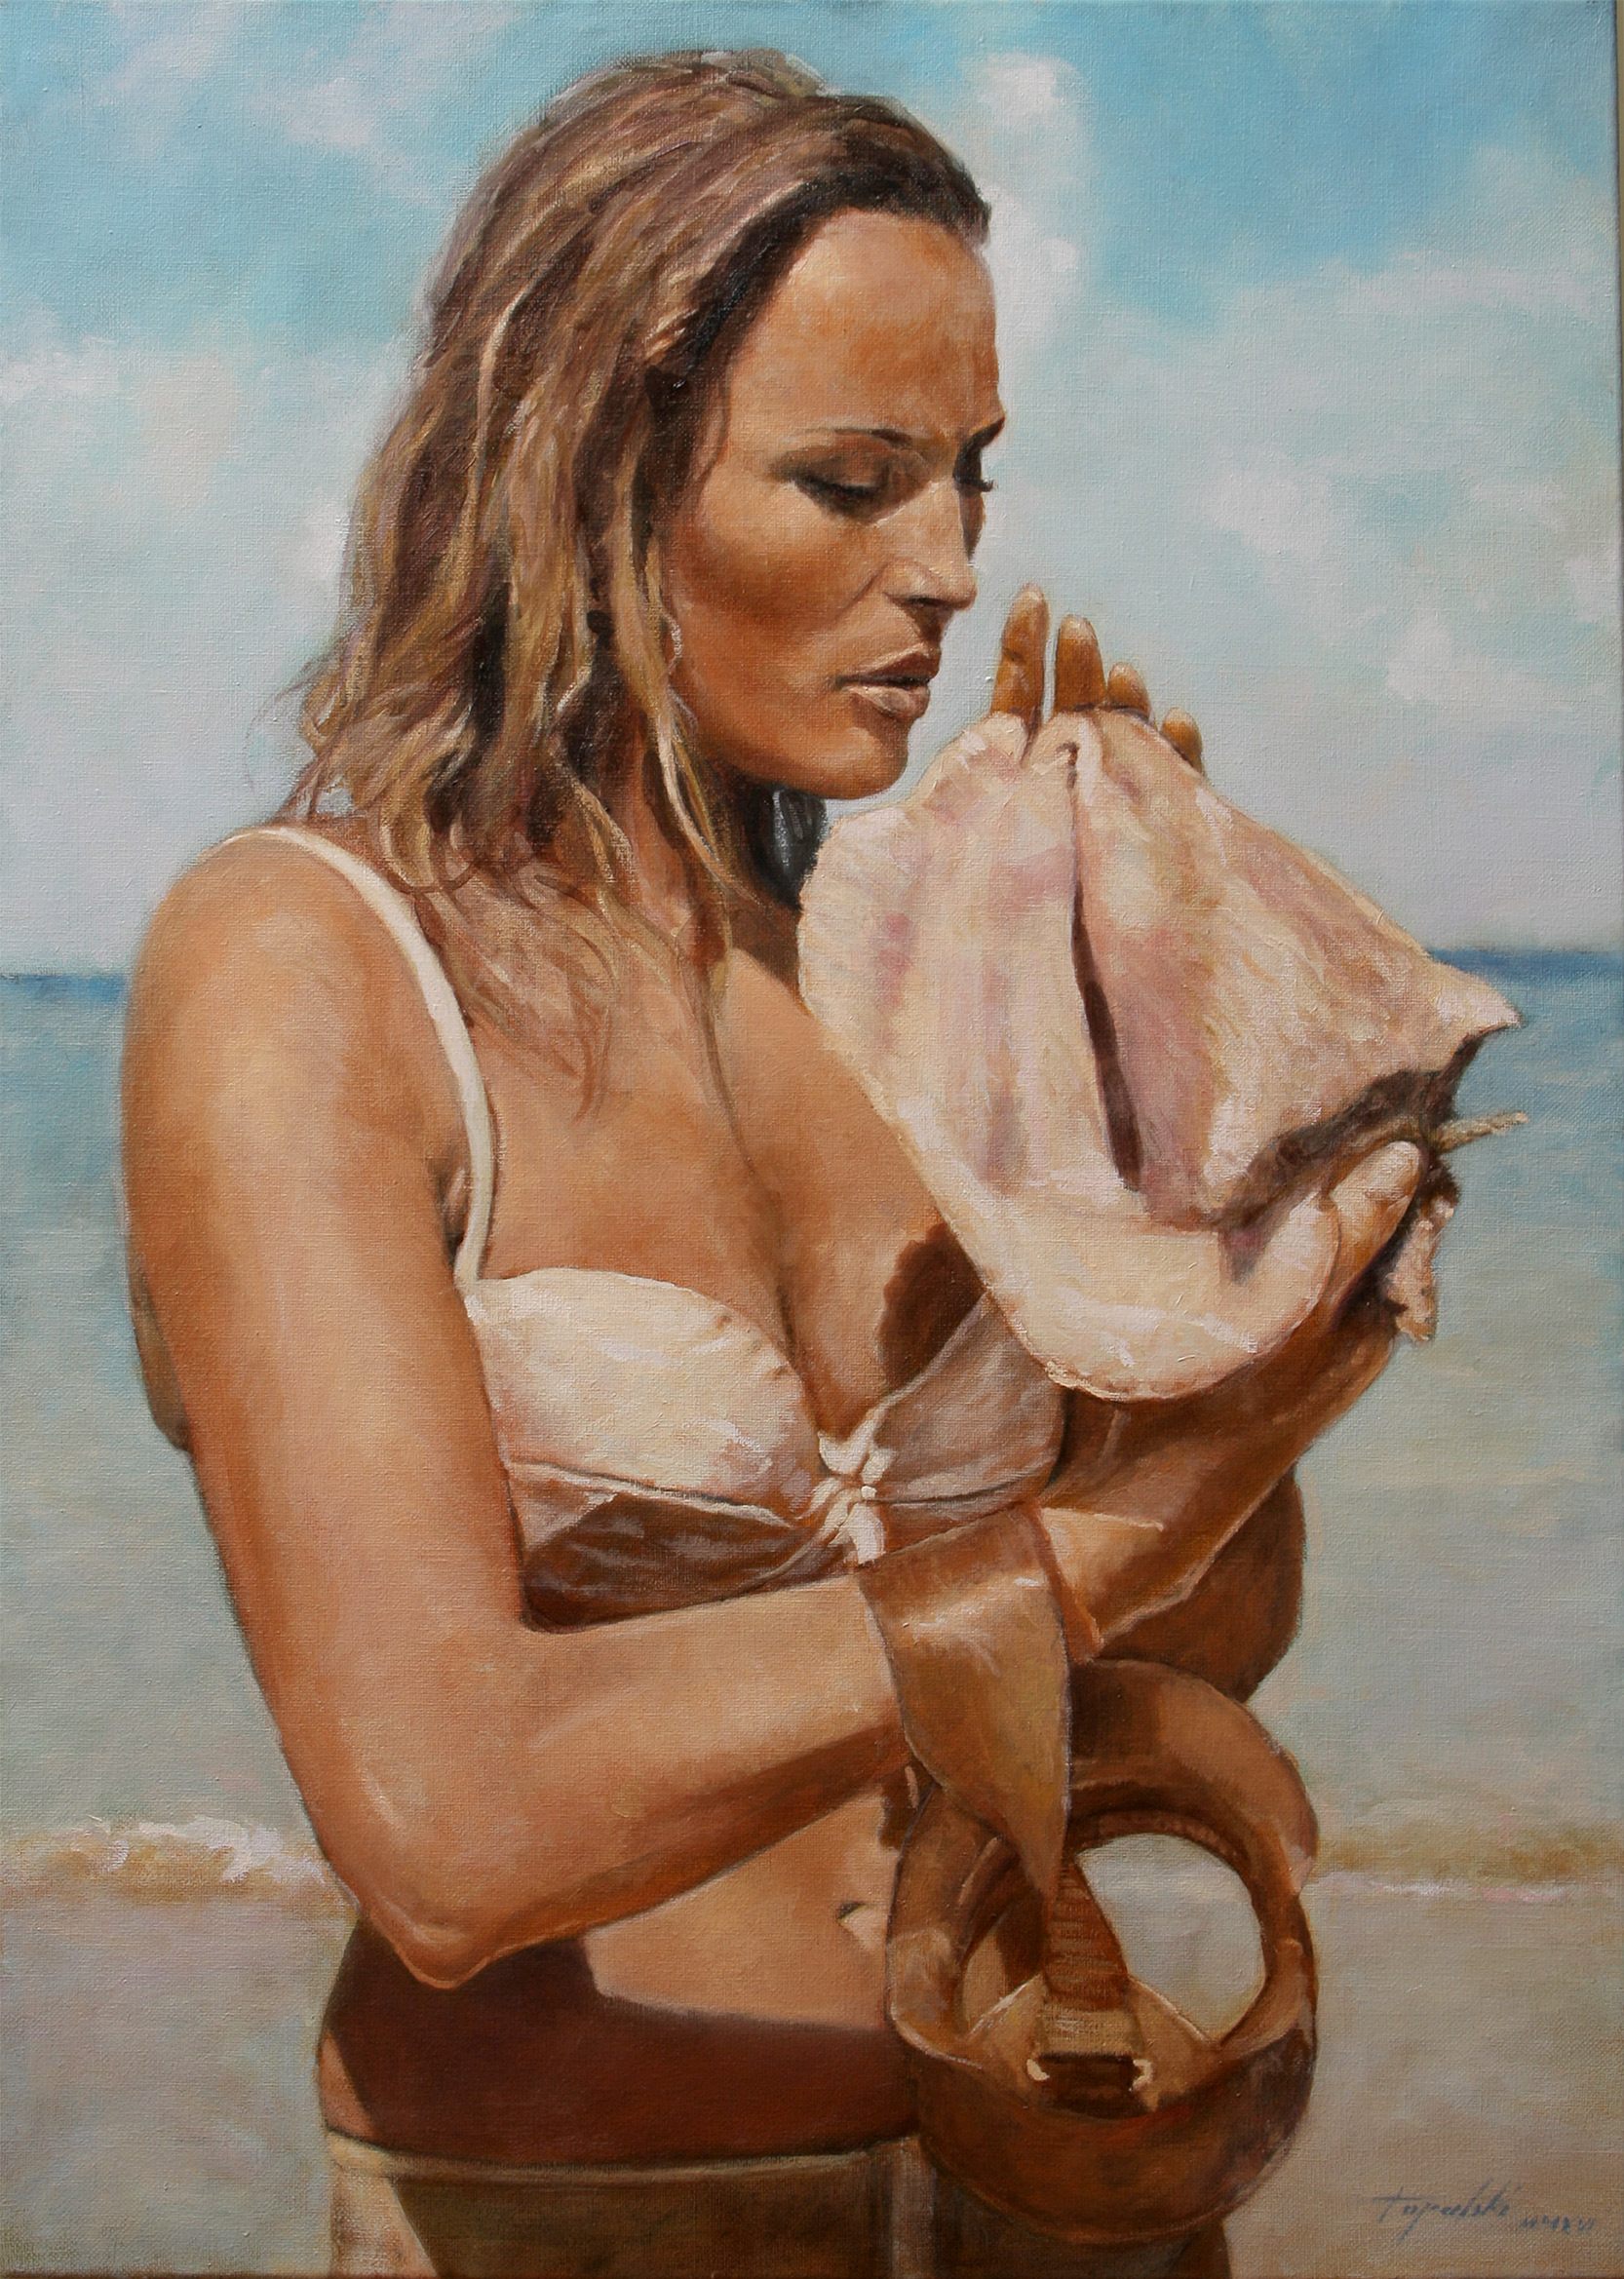 Fine Art - By the seaside-Ursula 007 Bond girl- female - Original Figurative Oil Painting on Canvas by artist Darko Topalski